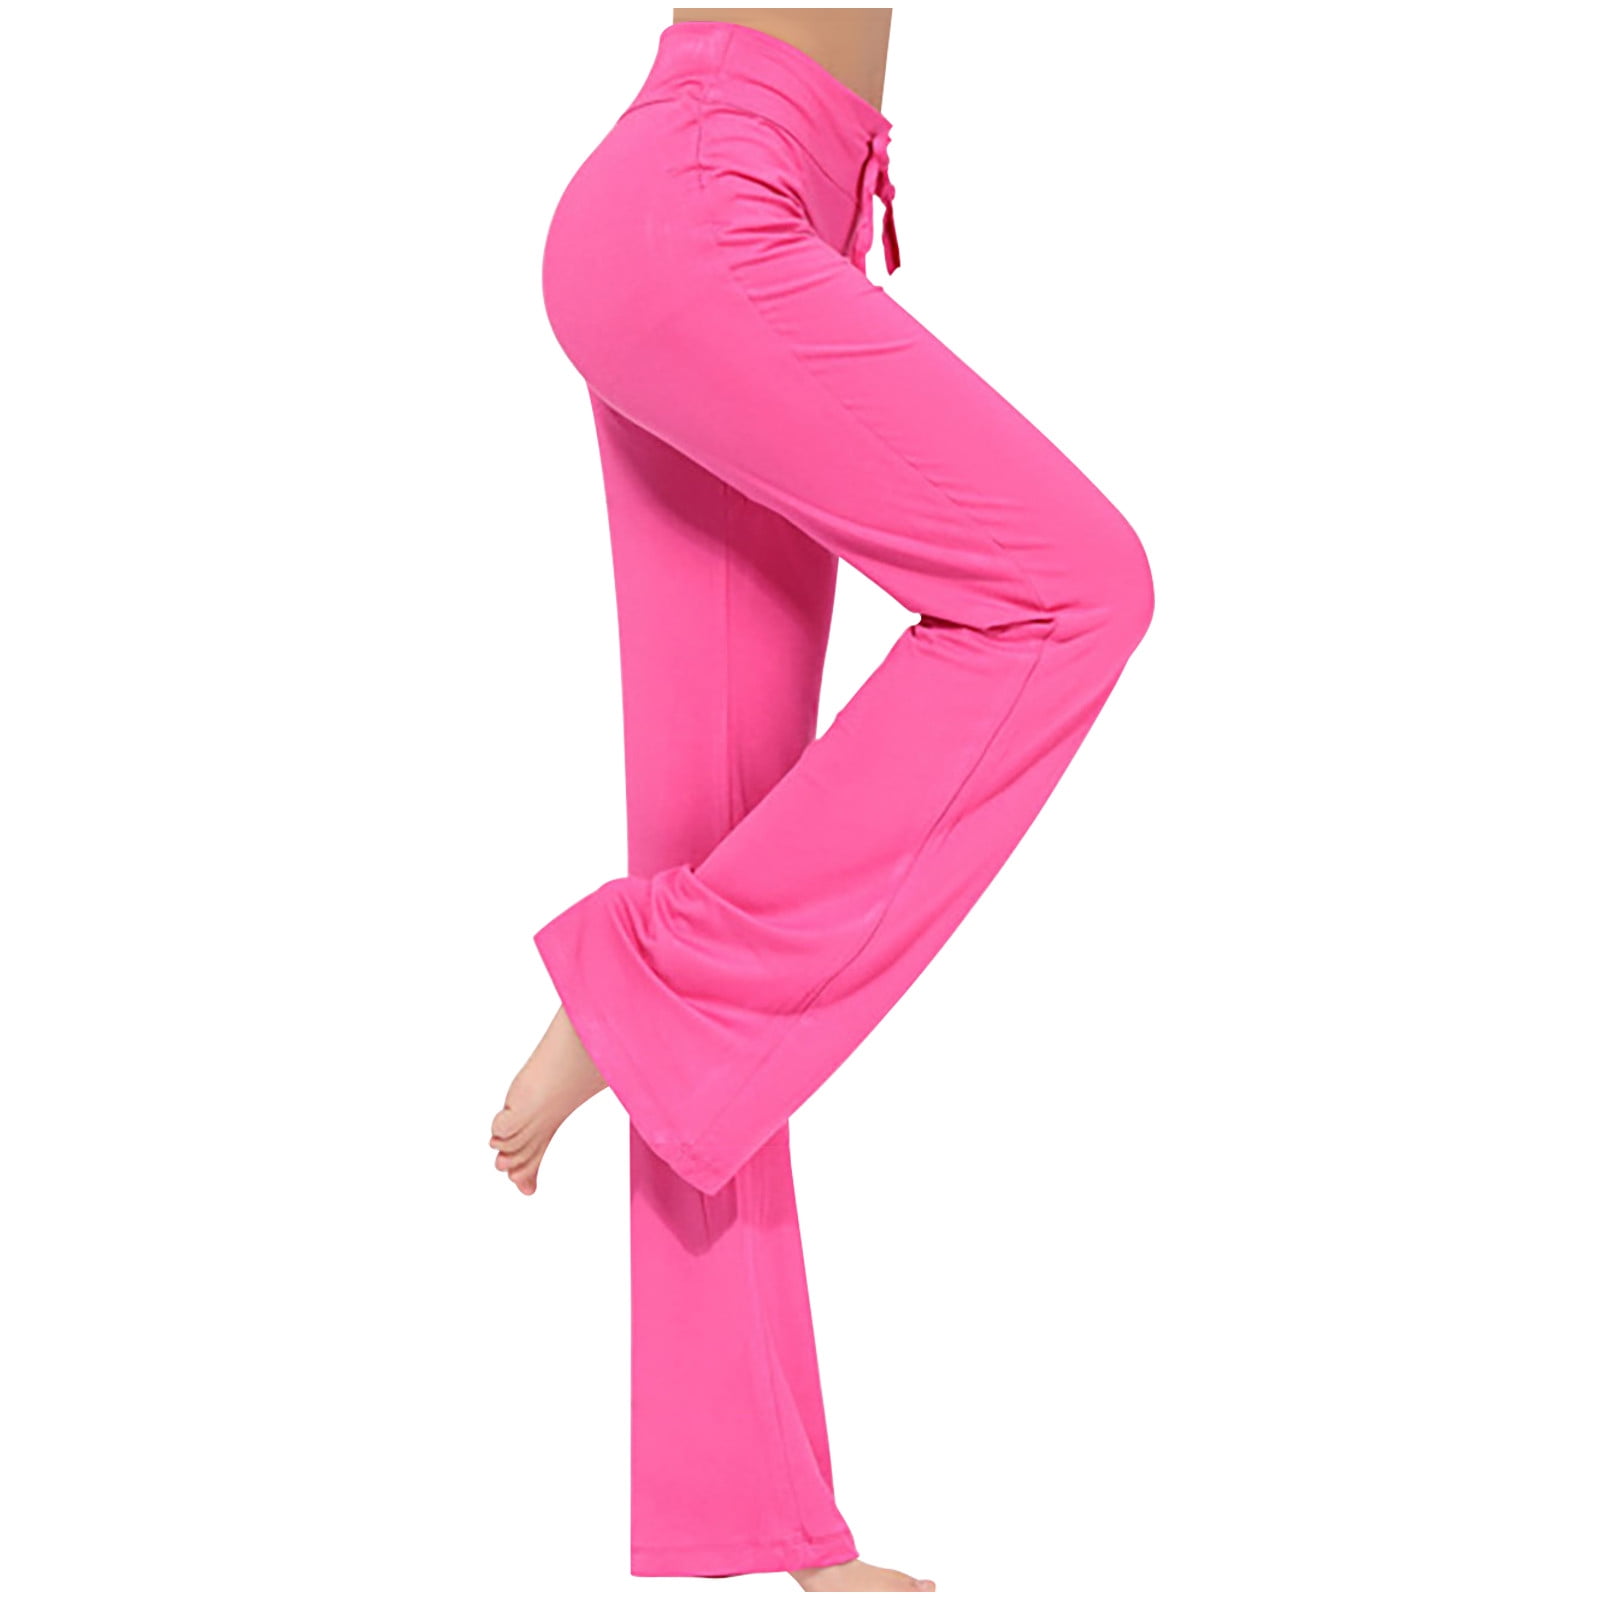 Buy YUHUISTART Casual Fashion Women Yoga Pants Premium Printed